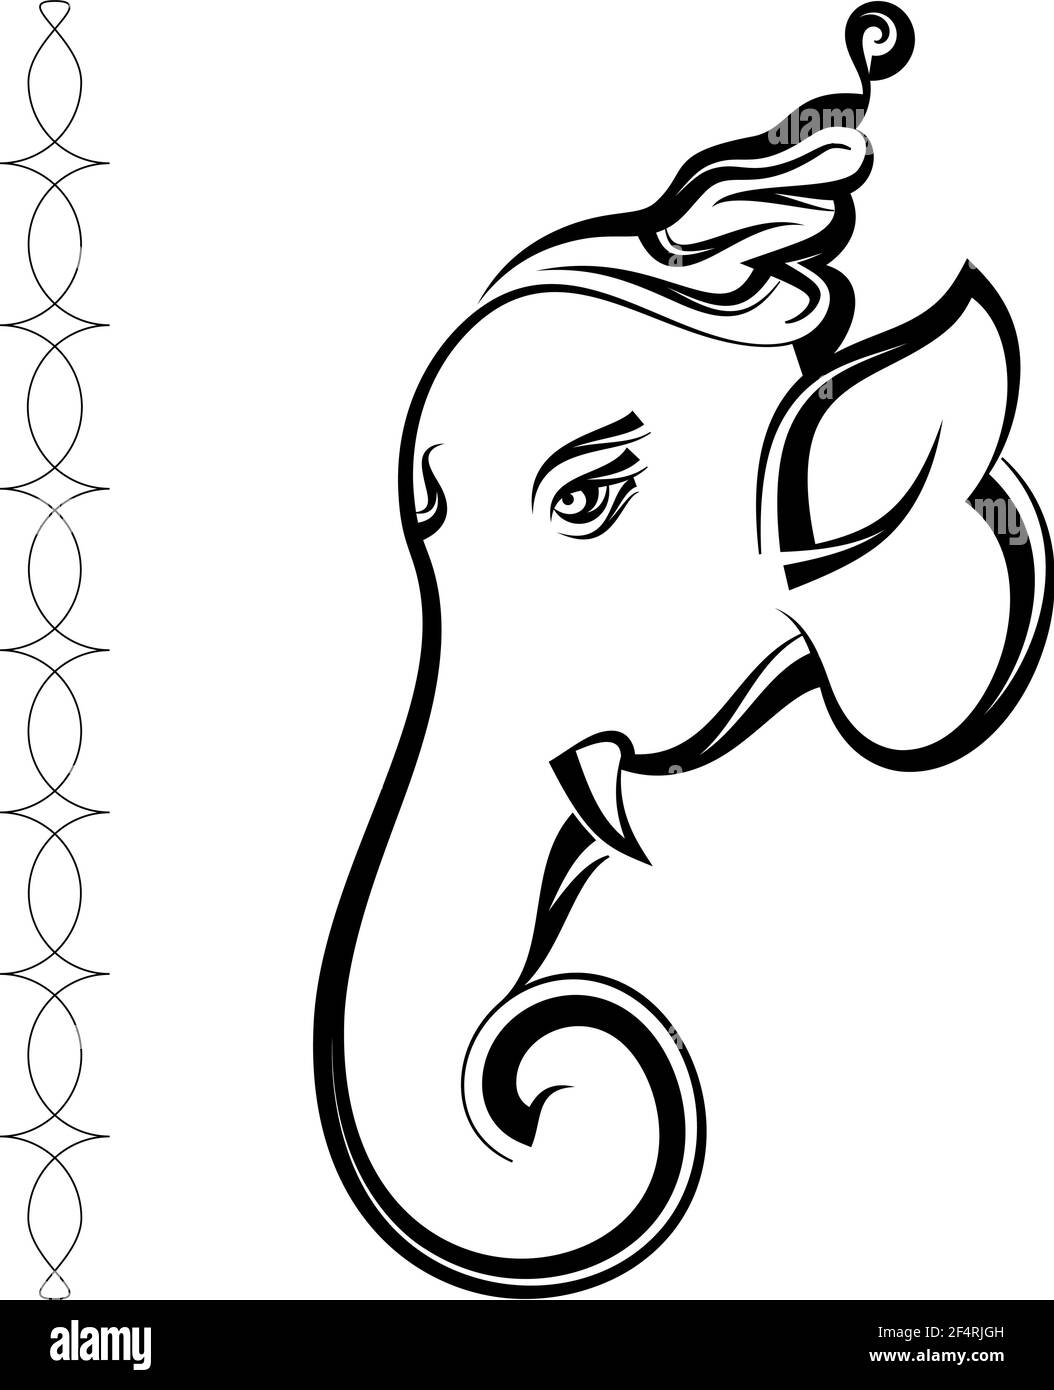 Ganesha Calligraphic Style Hand Drawn Design Vector Art Illustration Stock Vector